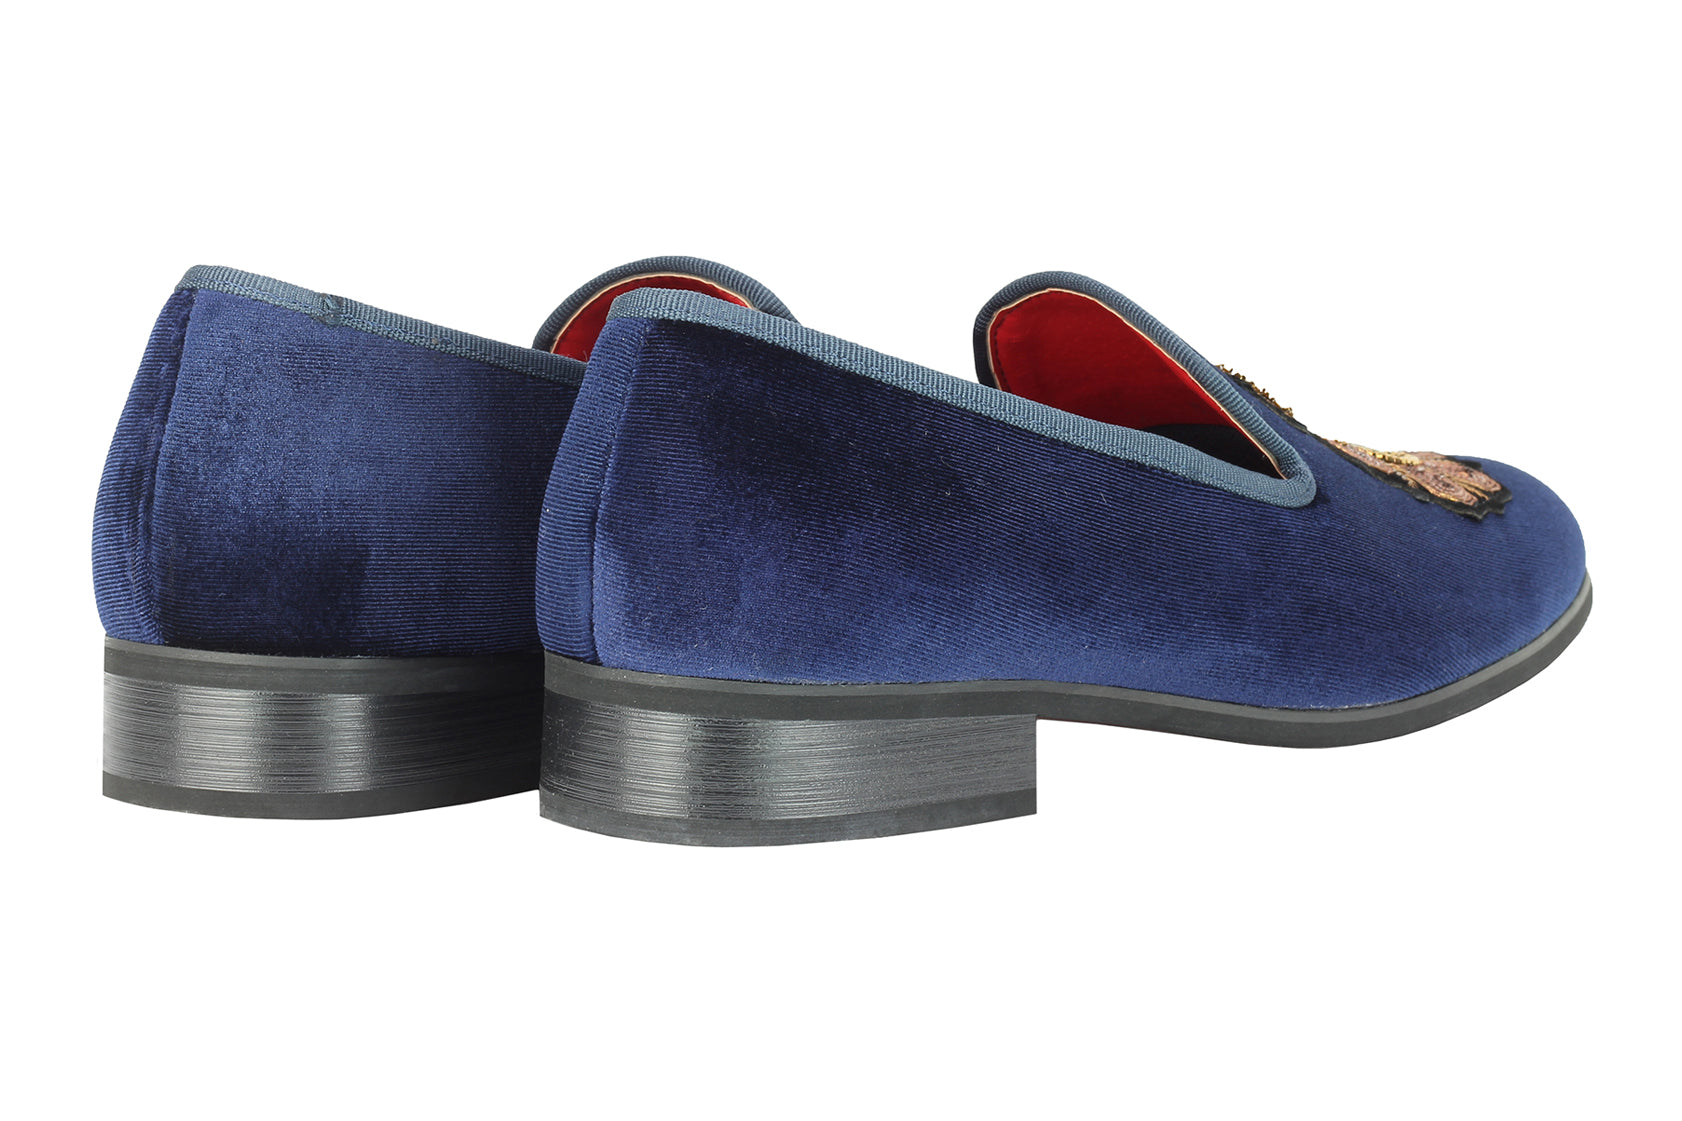 Mens Velvet Loafers Bee Crown Embroidered Vintage Dress Shoes Slip On Slippers Navy Blue